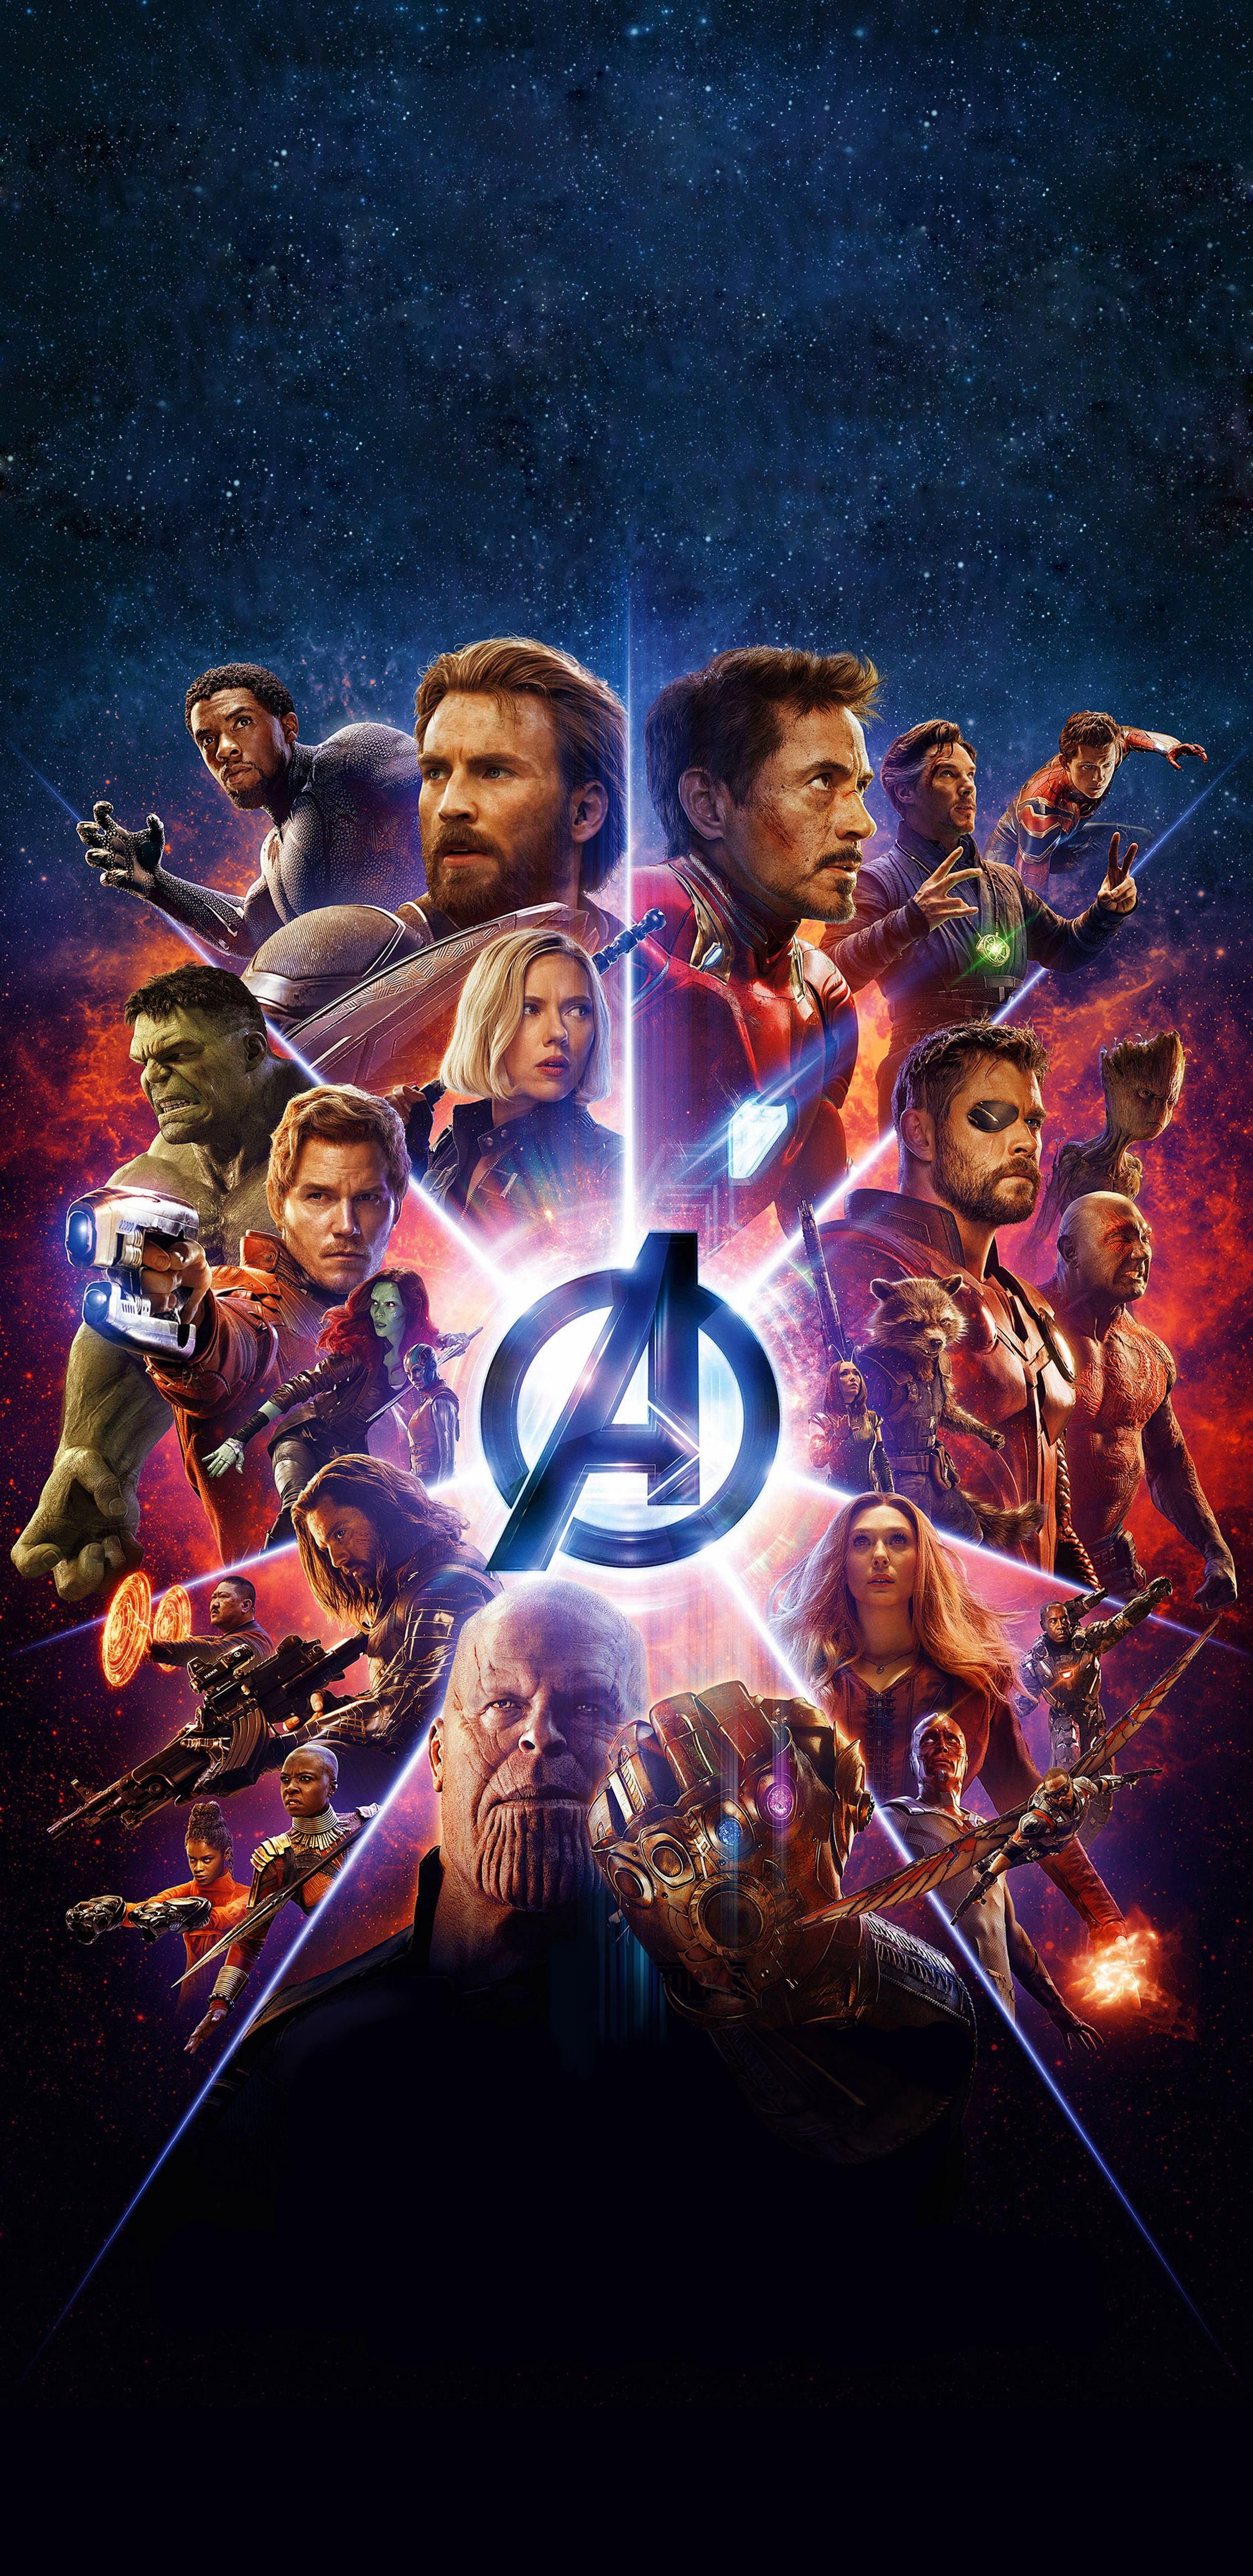 My favorite Avengers Infinity War Poster Optimized for Long Mobile